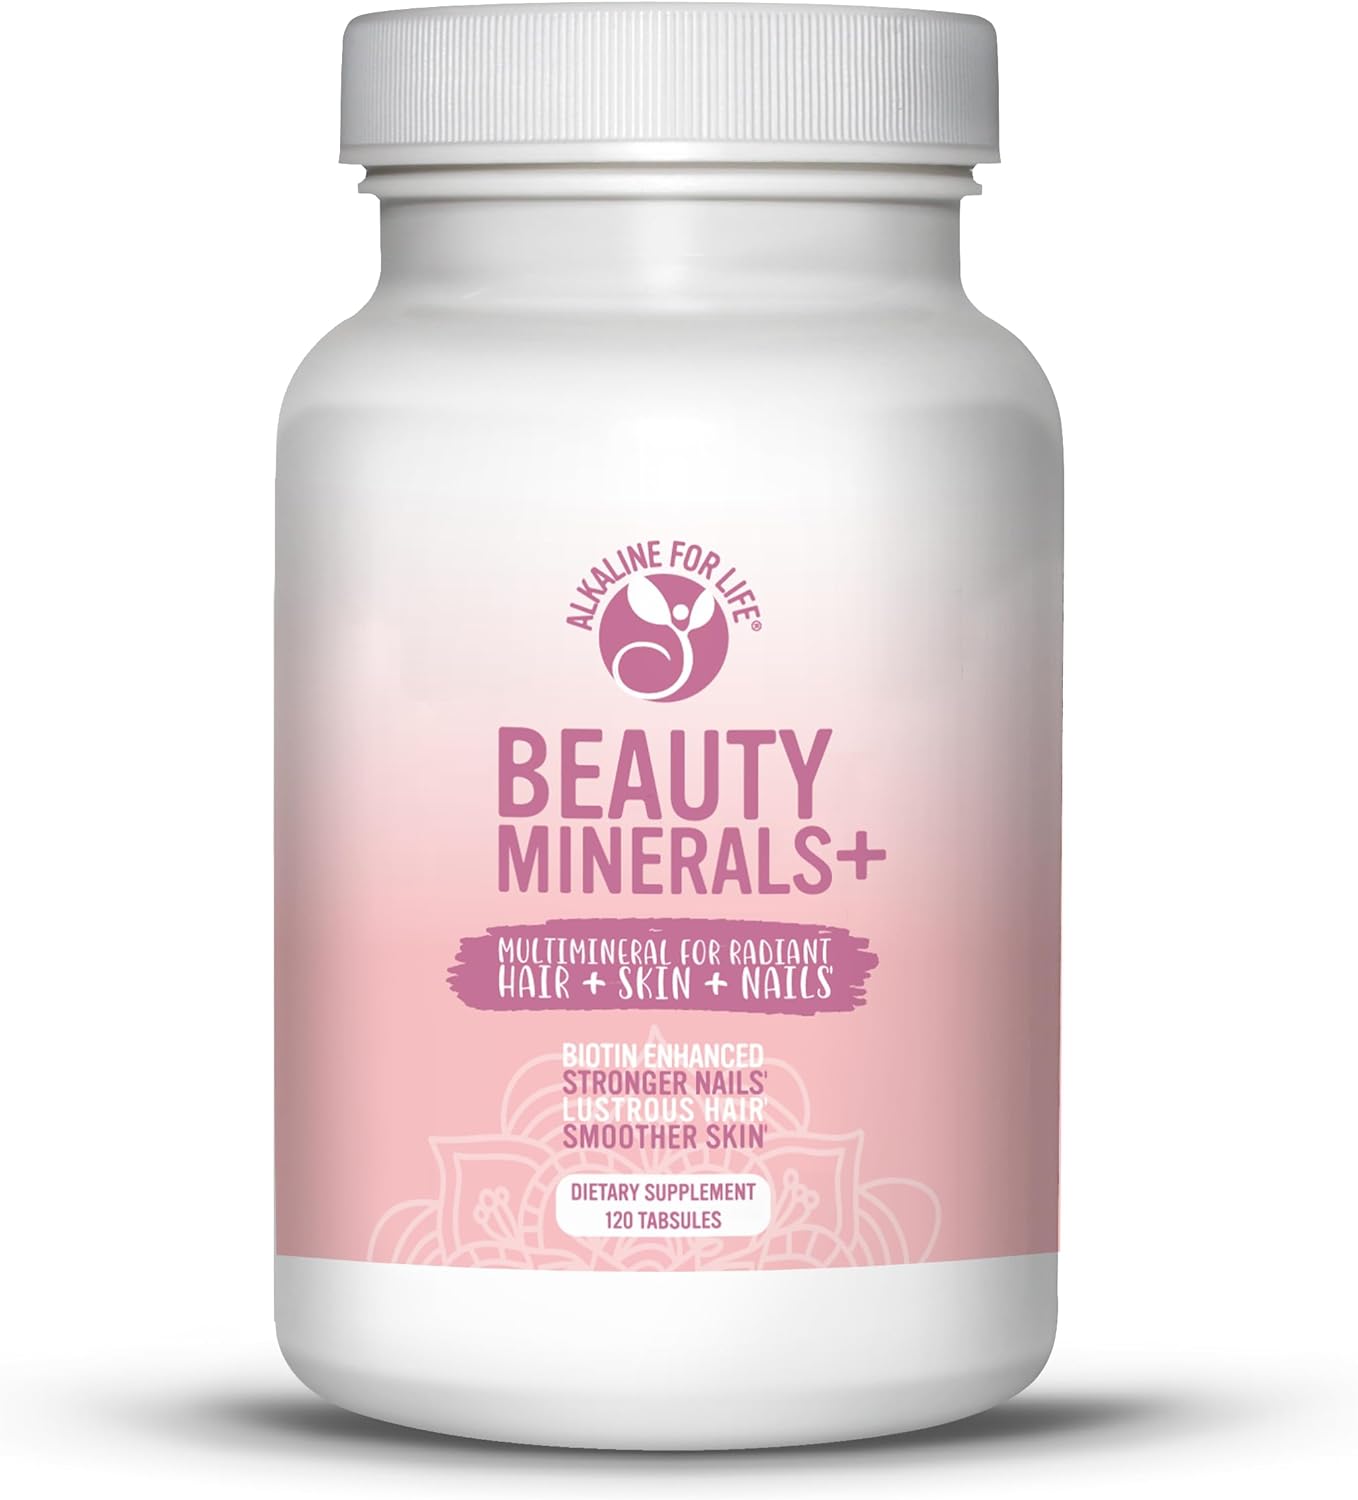 Beauty Minerals+